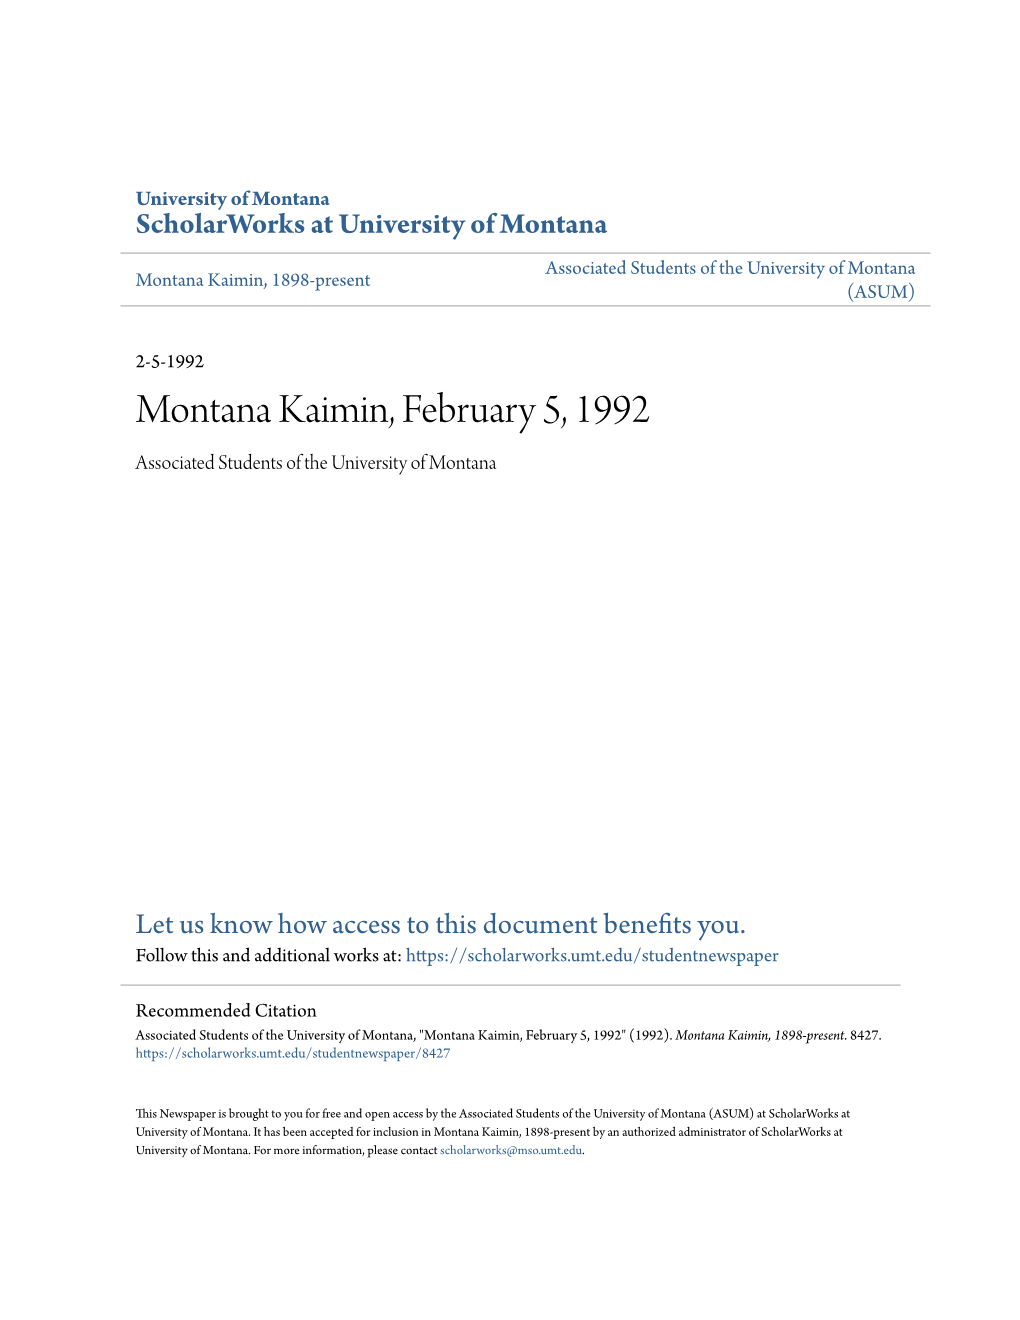 Montana Kaimin, February 5, 1992 Associated Students of the University of Montana